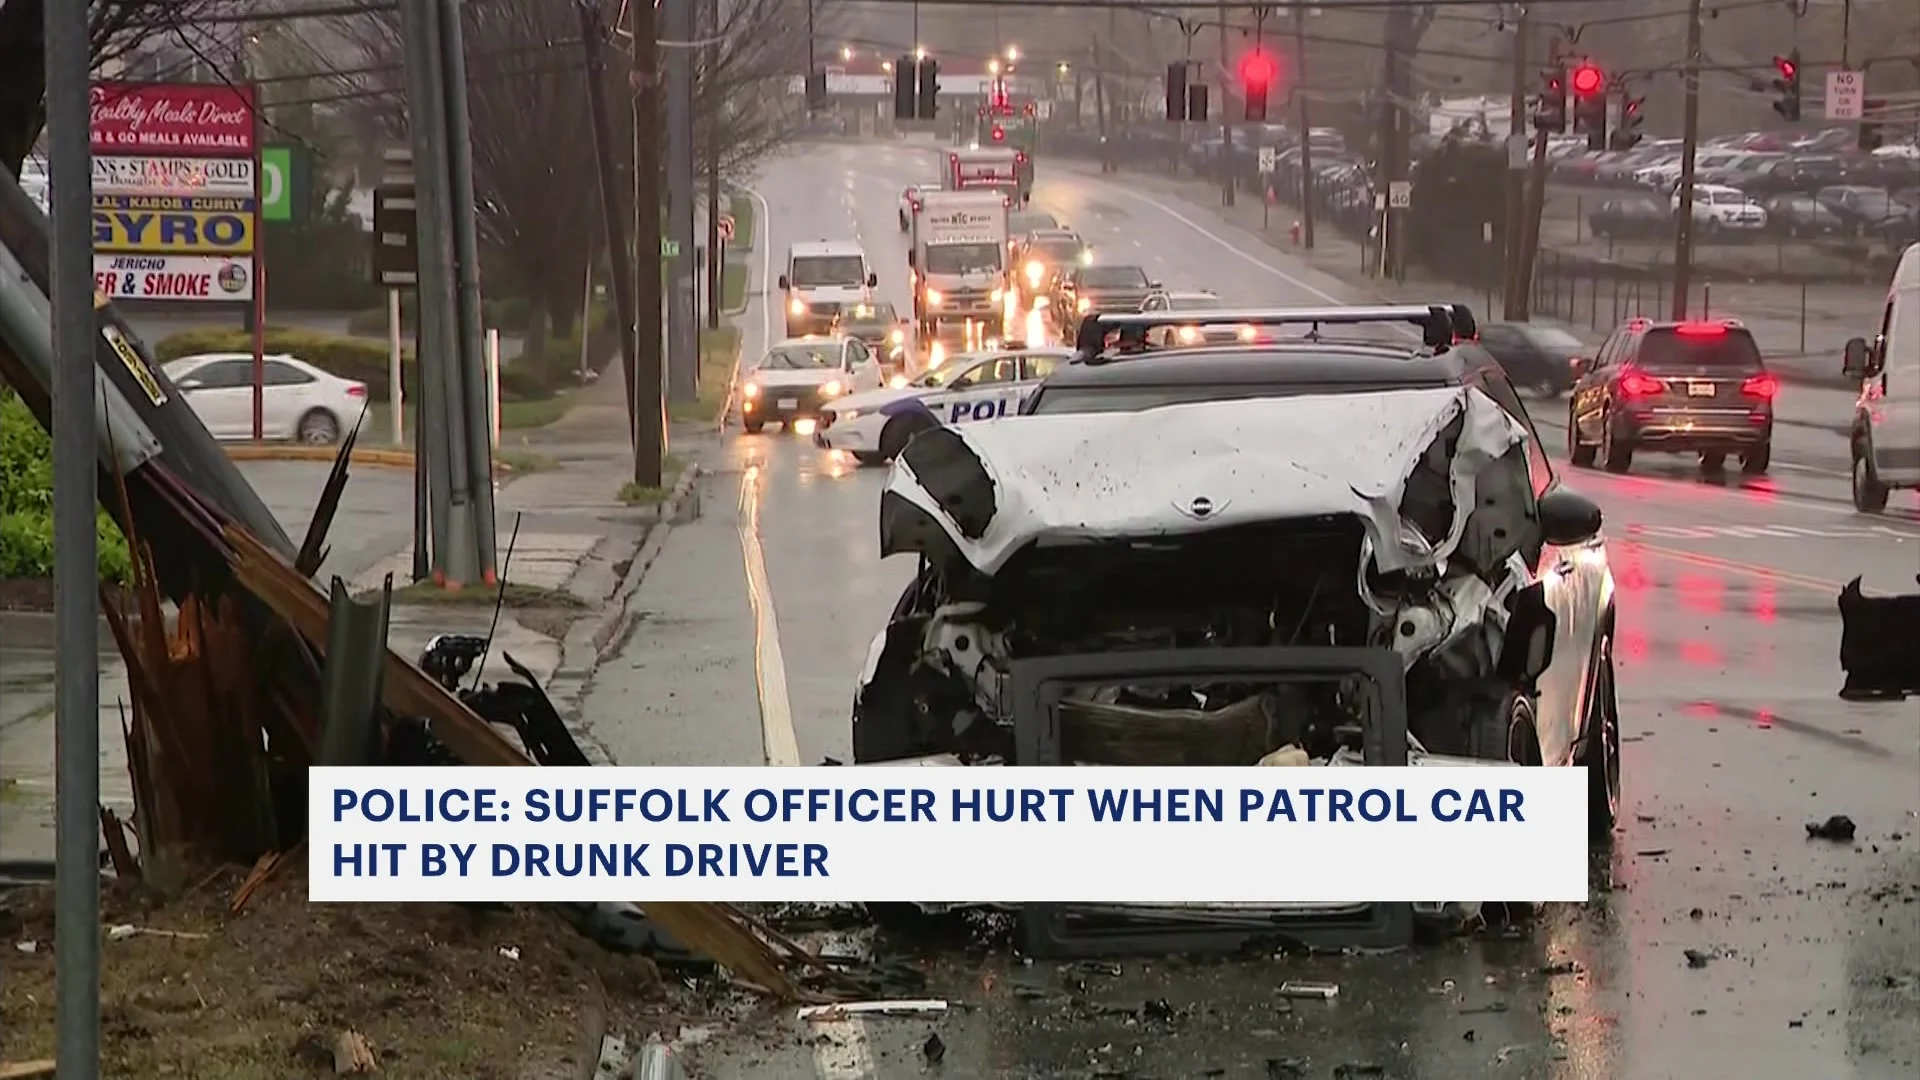 Police: Drunk driver hits patrol car at scene of DWI crash; Suffolk officer hurt – News 12 Long Island